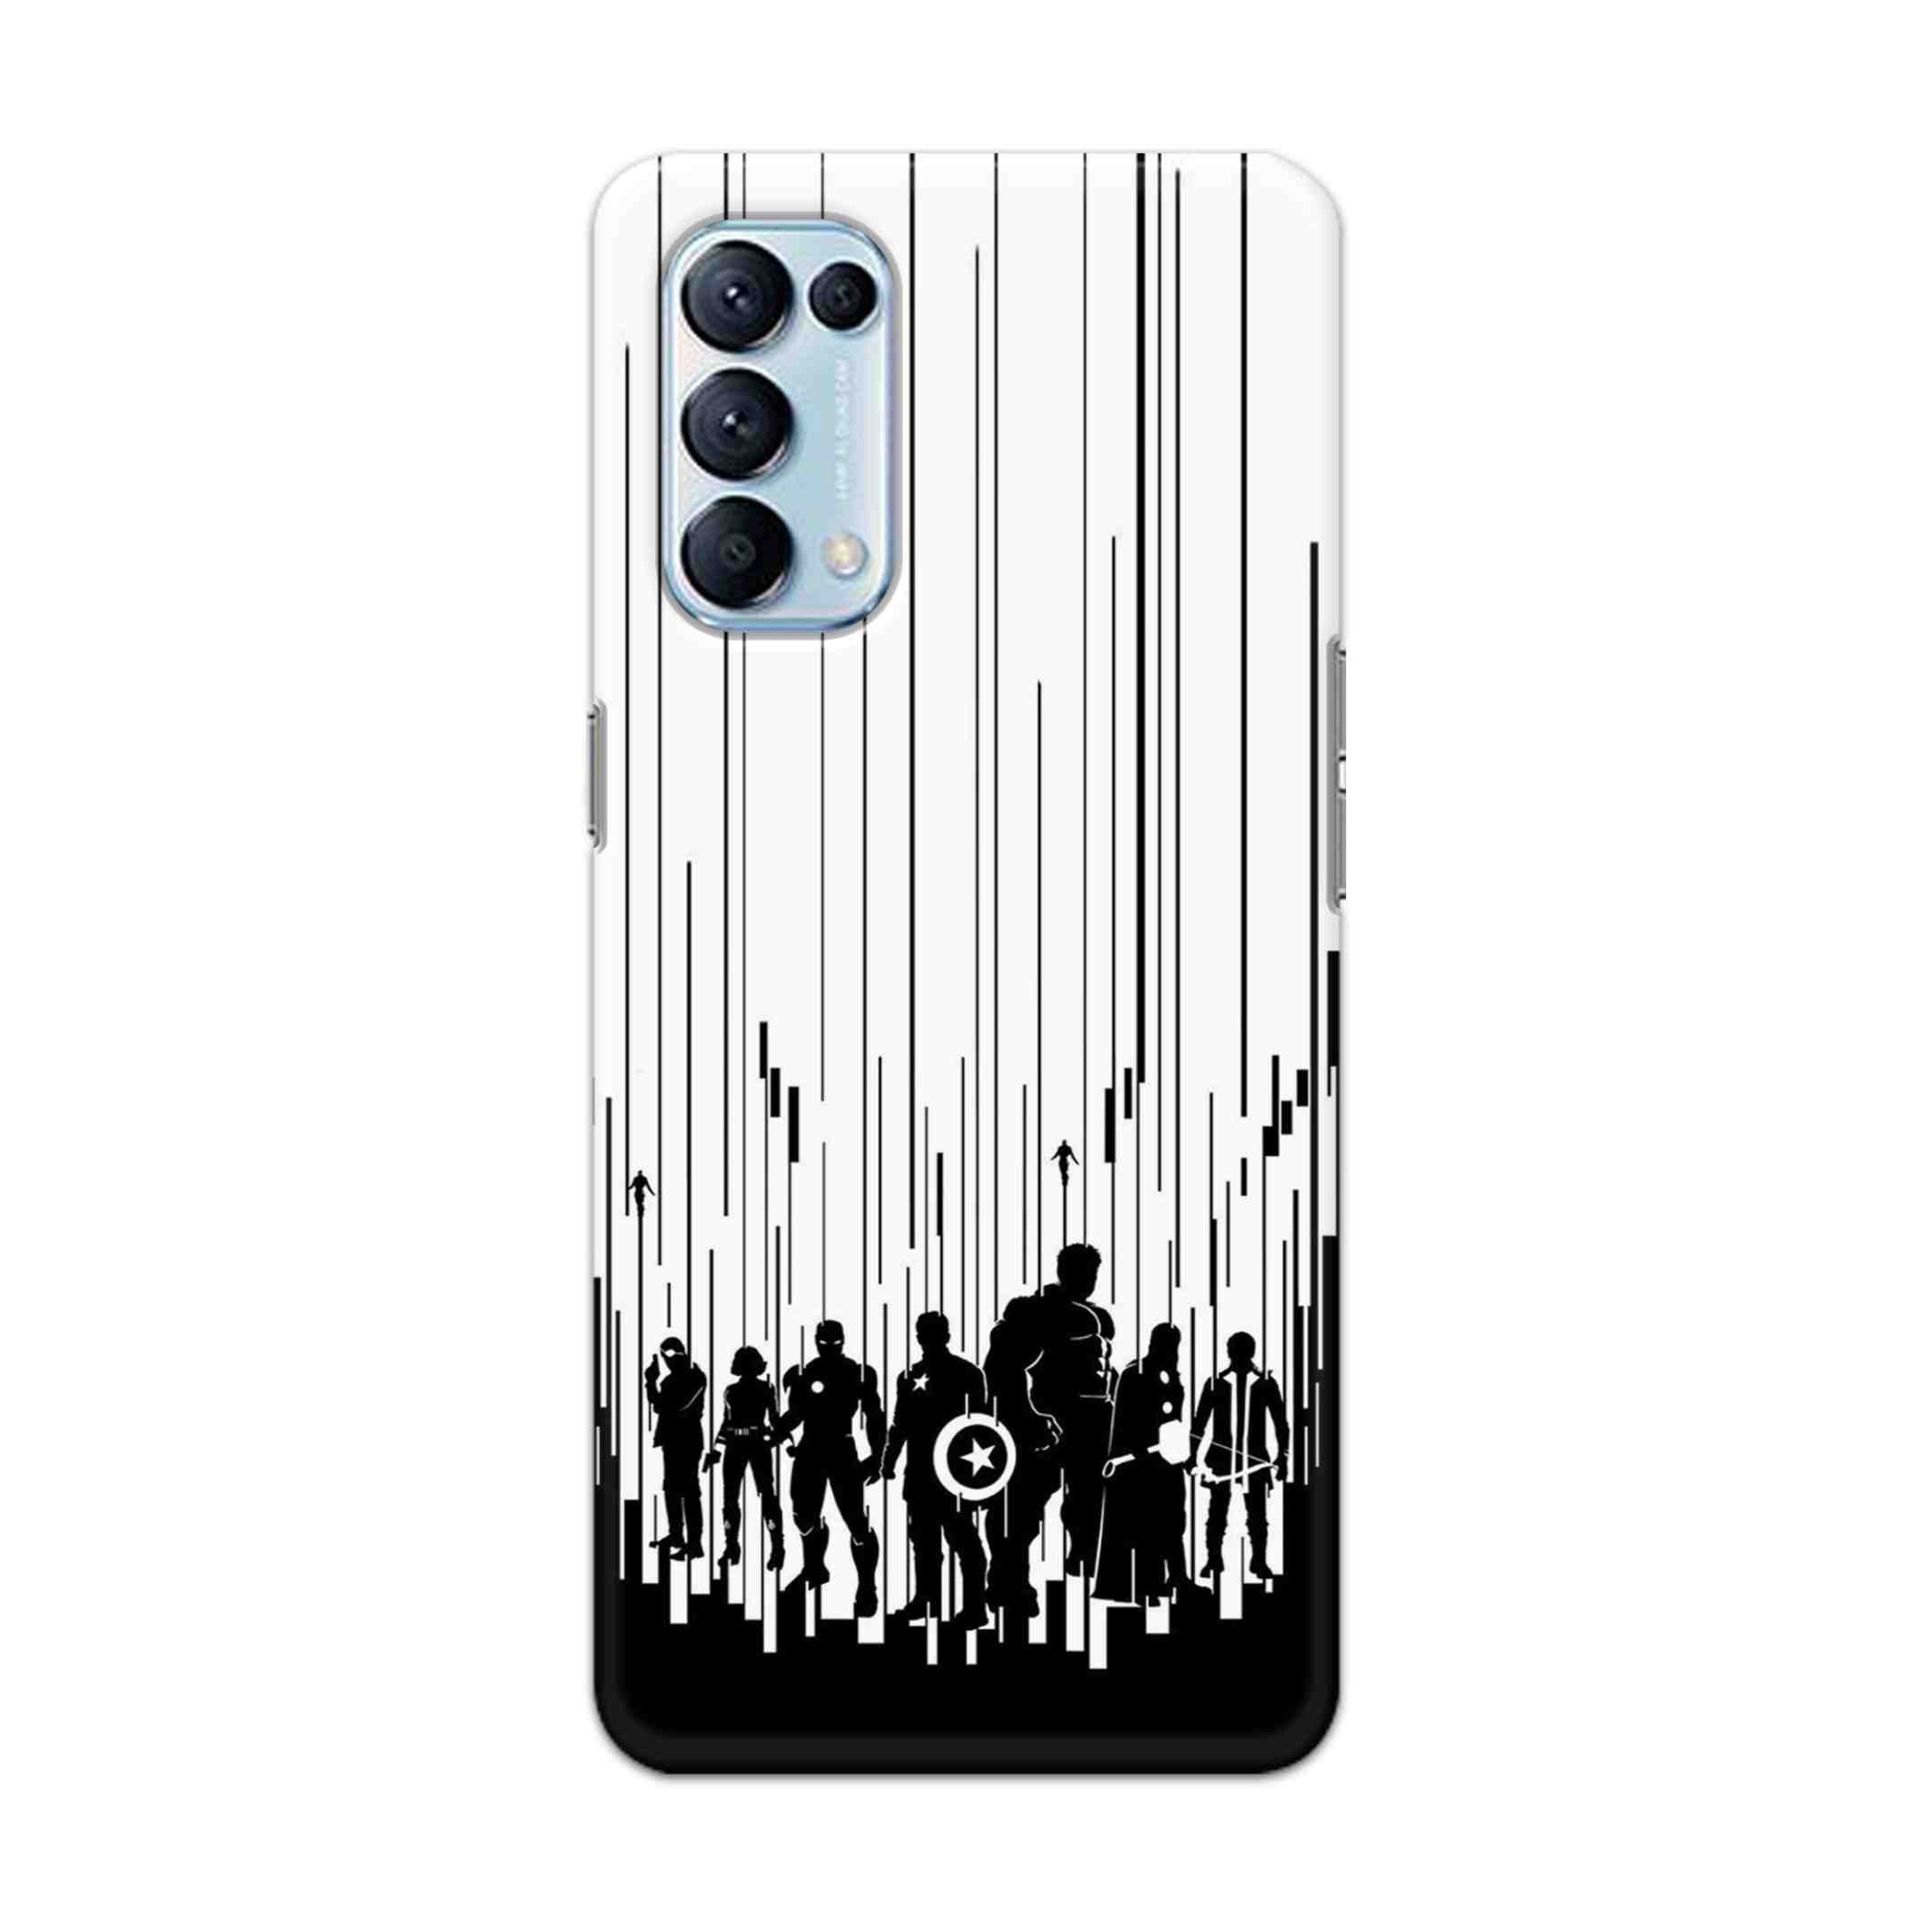 Buy Black And White Avengers Hard Back Mobile Phone Case Cover For Oppo Reno 5 Pro 5G Online